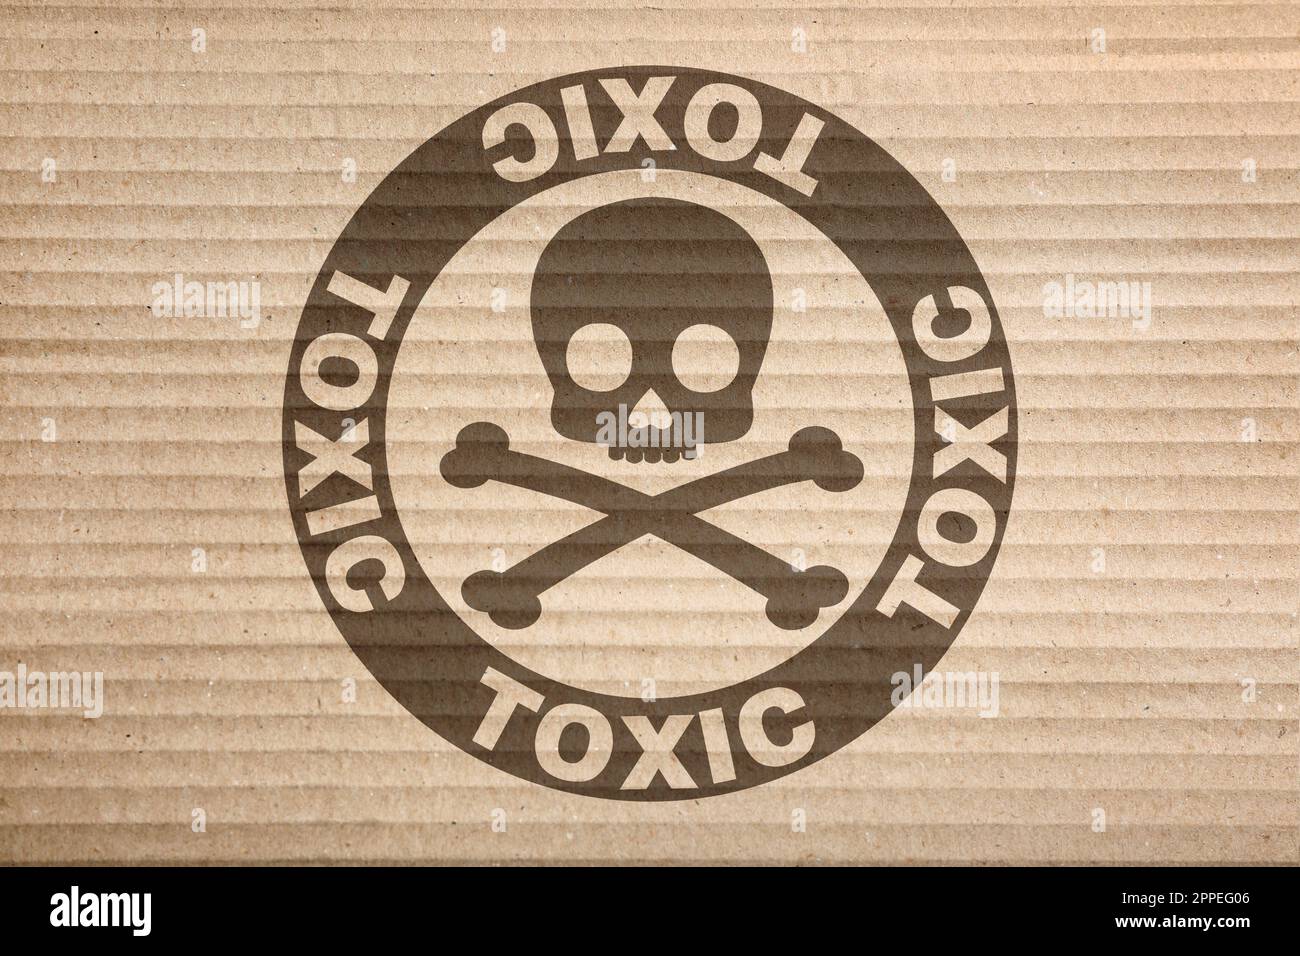 Premium Vector  Danger toxic sign skull icon warning skull symbol